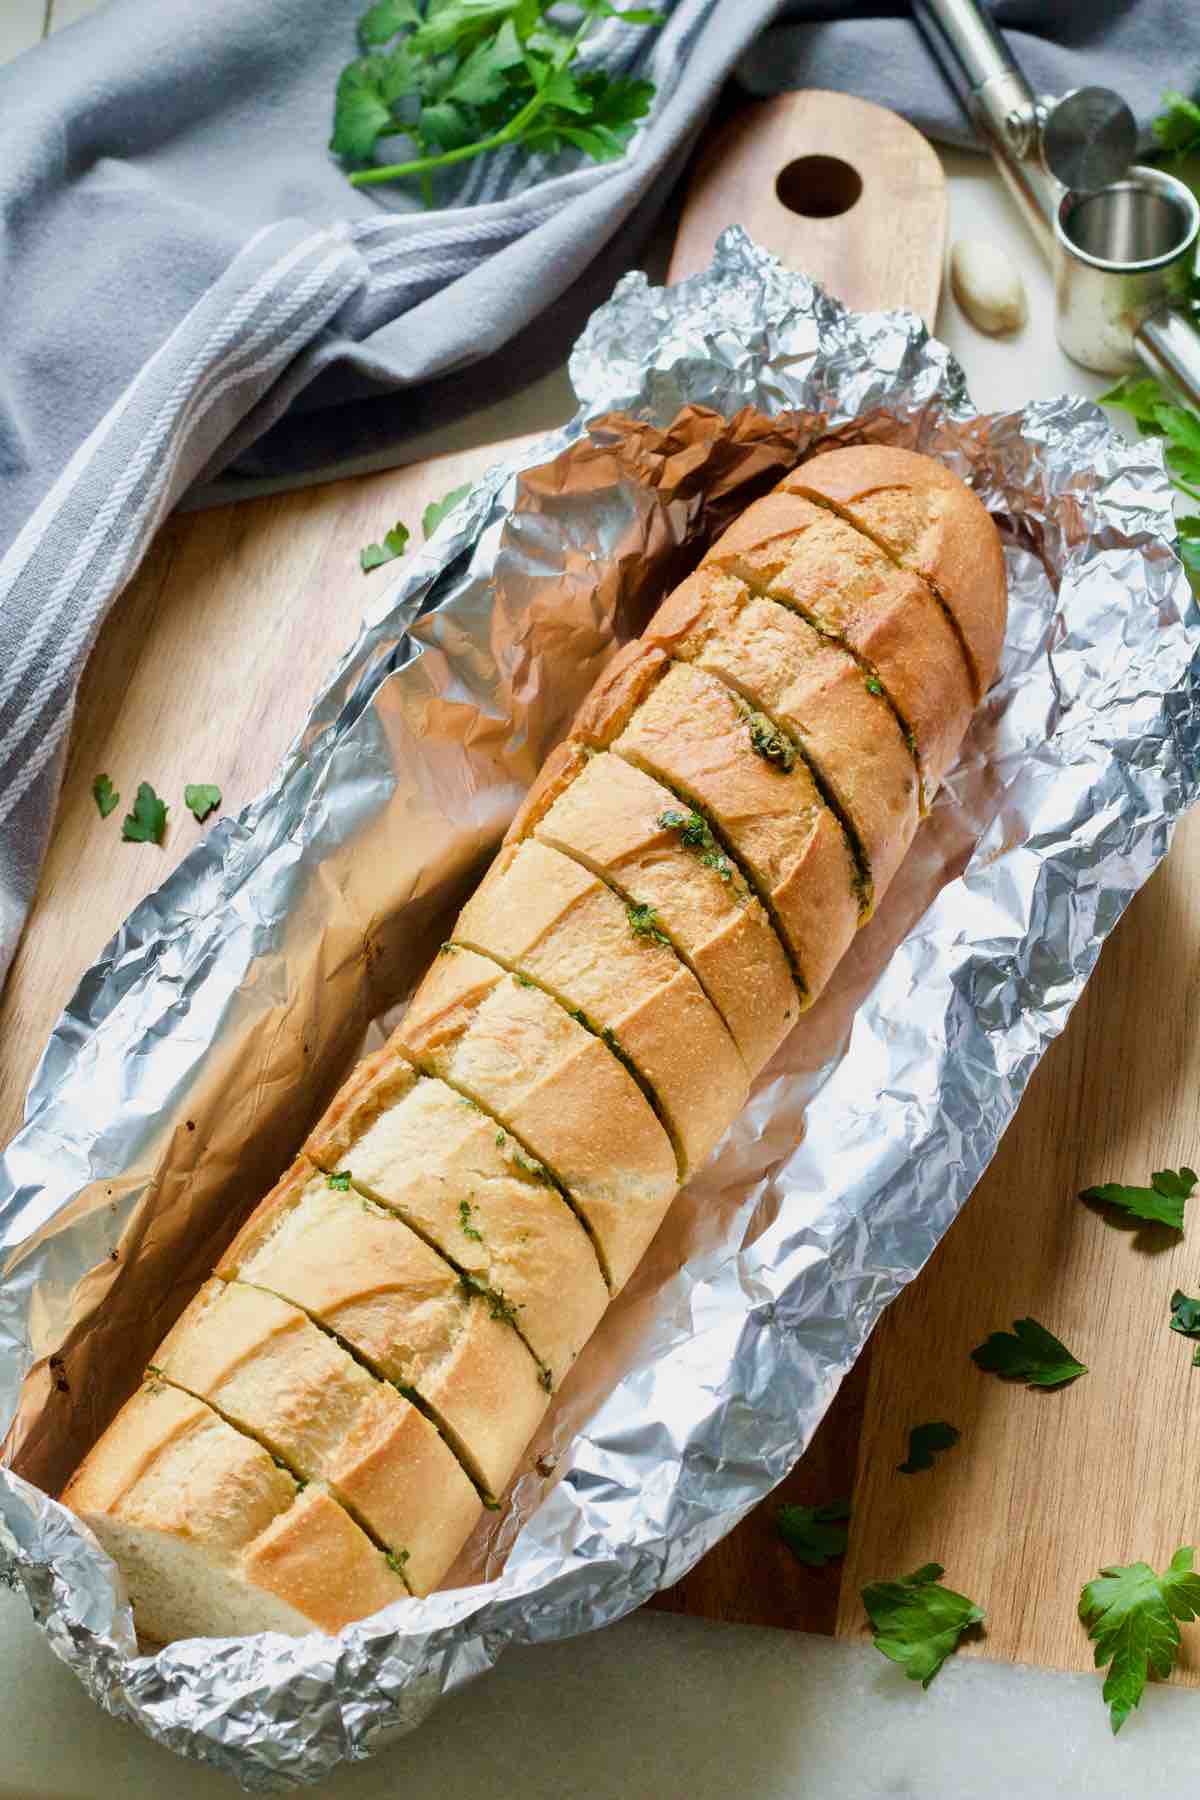 Baked vegan garlic bread resting in a foil parcel.